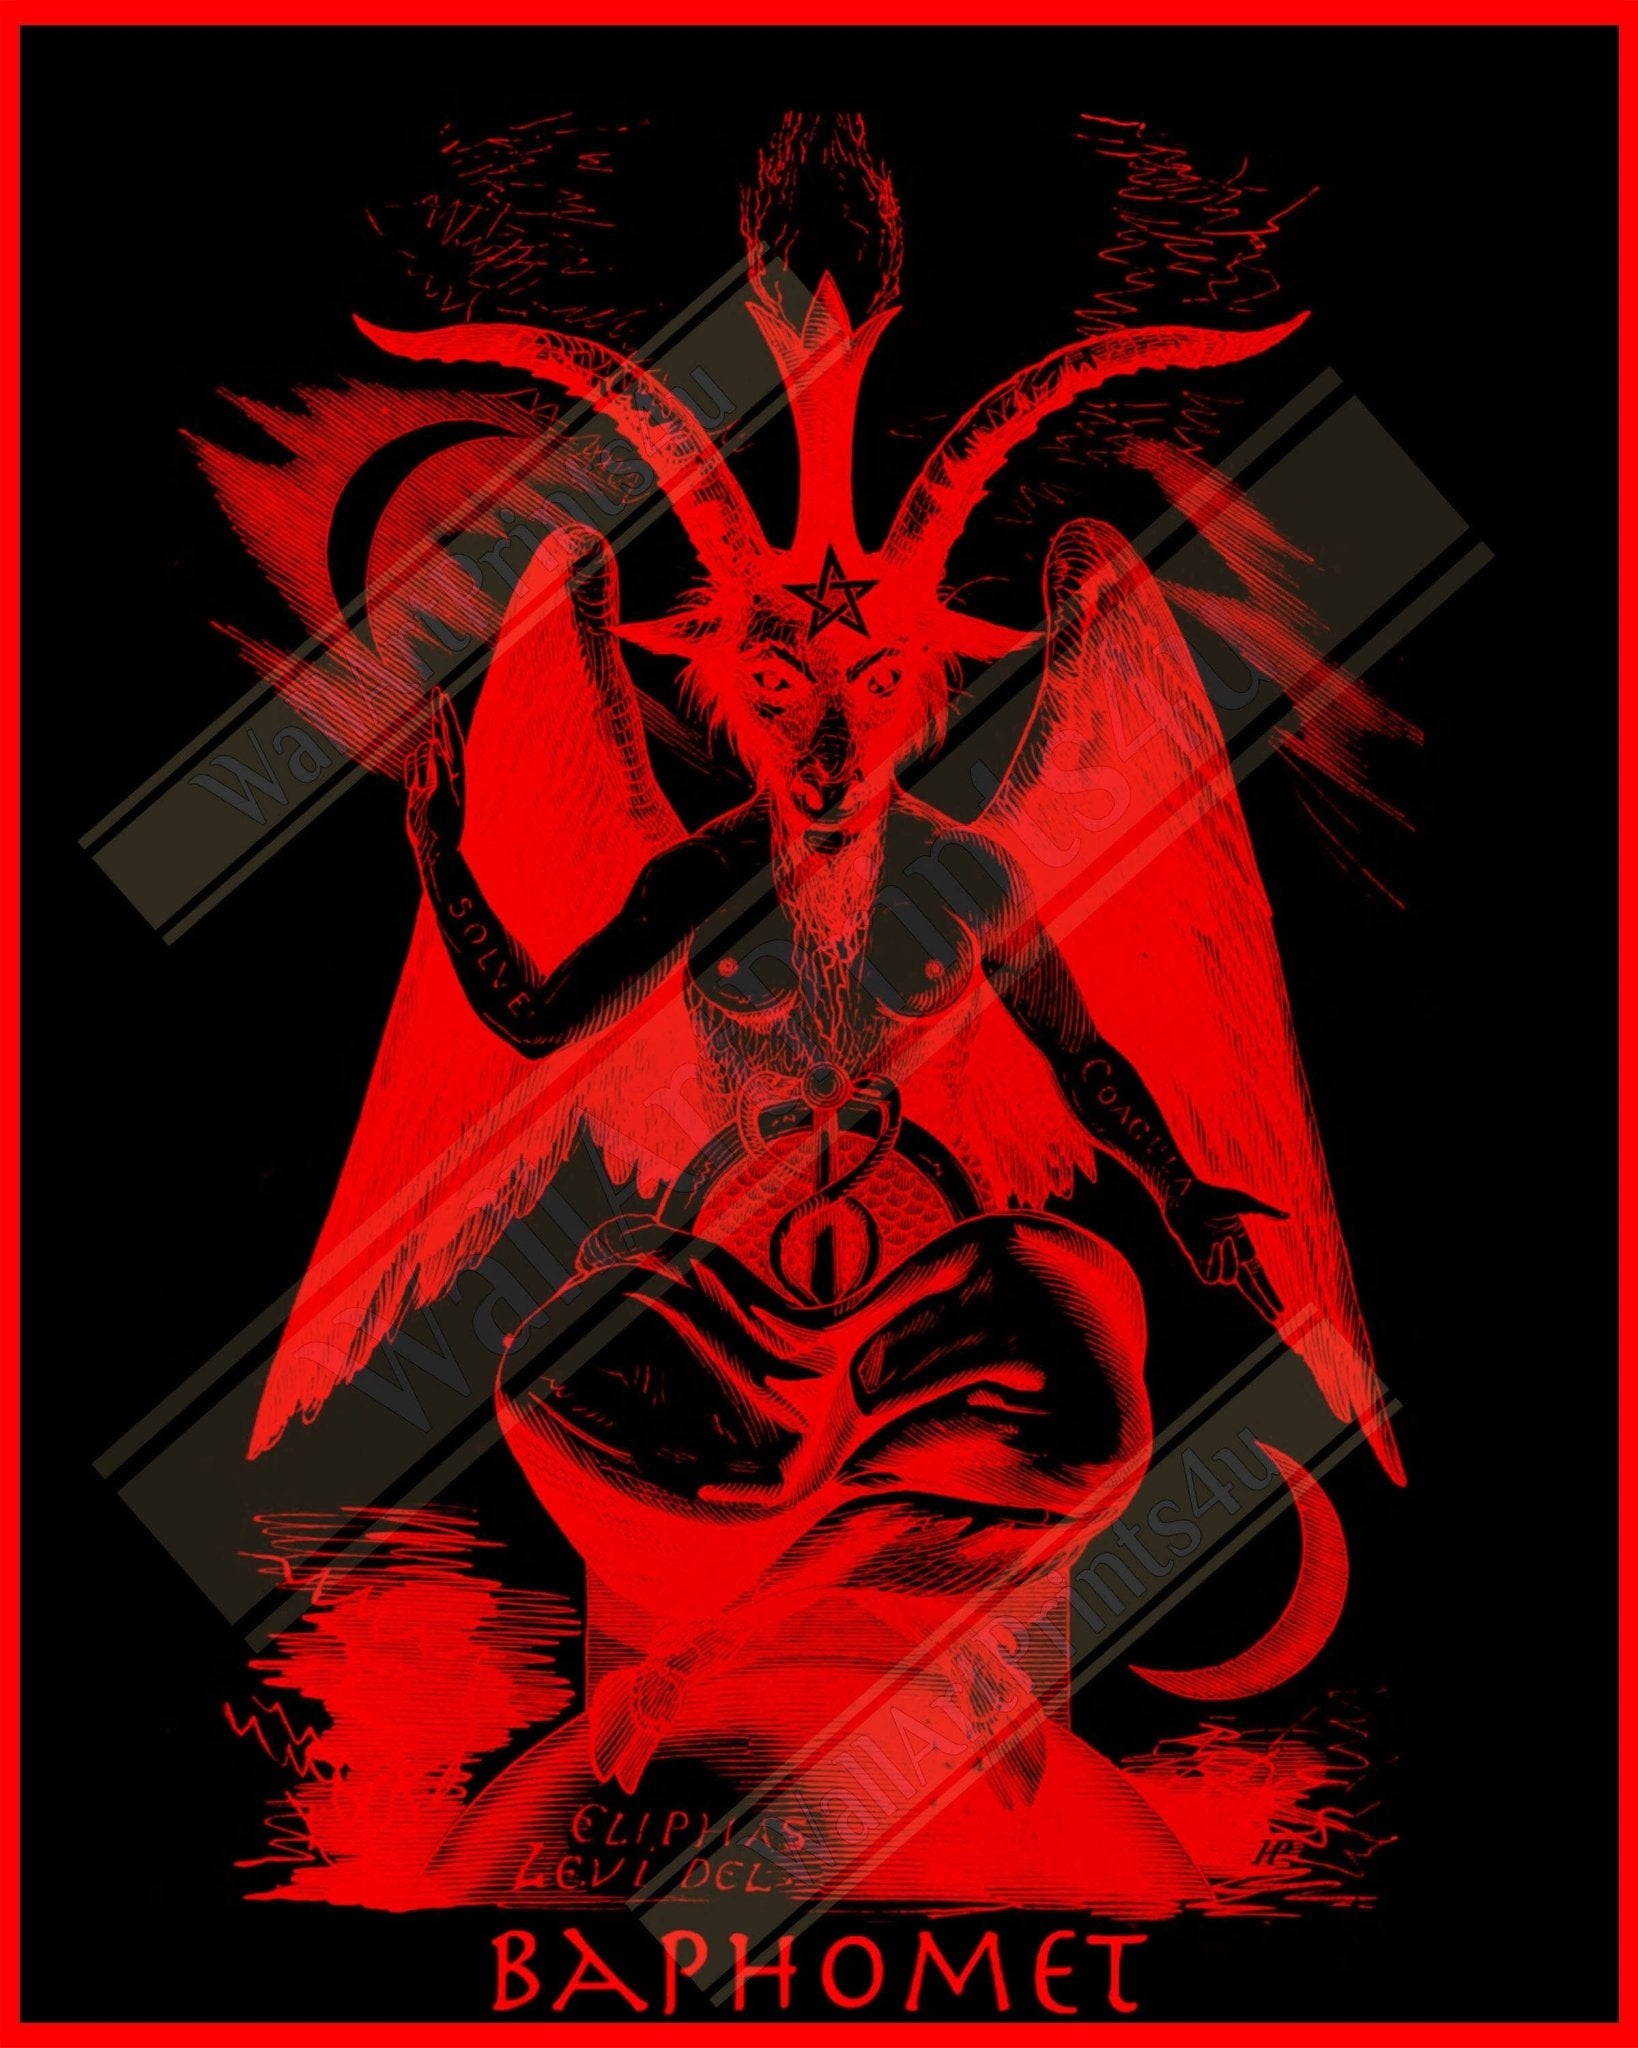 Baphomet Canvas Print, Red Devil Halloween Wall Art, Lucifer Devil Canvas - WallArtPrints4U